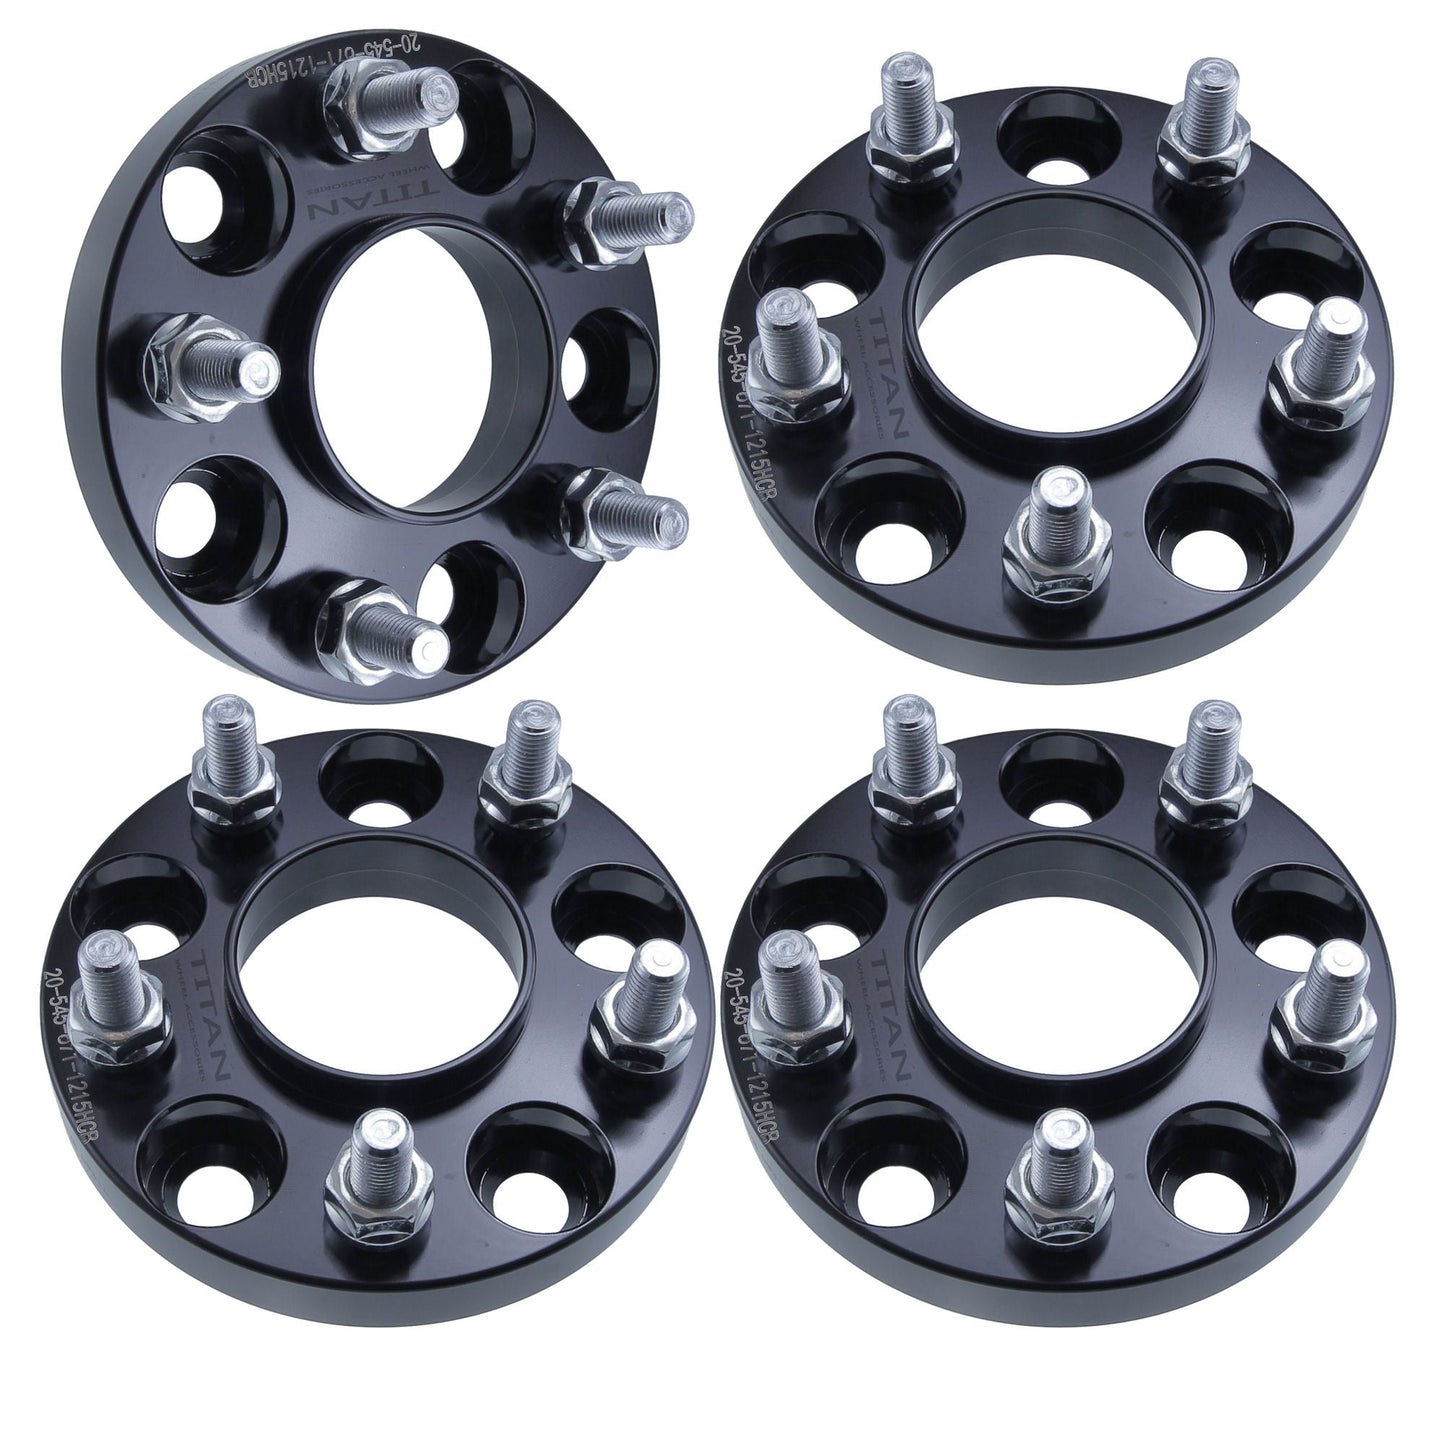 15mm Titan Wheel Spacers for Mazda 3 5 6 RX Mitsubishi Eclipse | 5x114.3 (5x4.5) | 67.1 Hubcentric |12x1.25 Studs |  Set of 4 | Titan Wheel Accessories